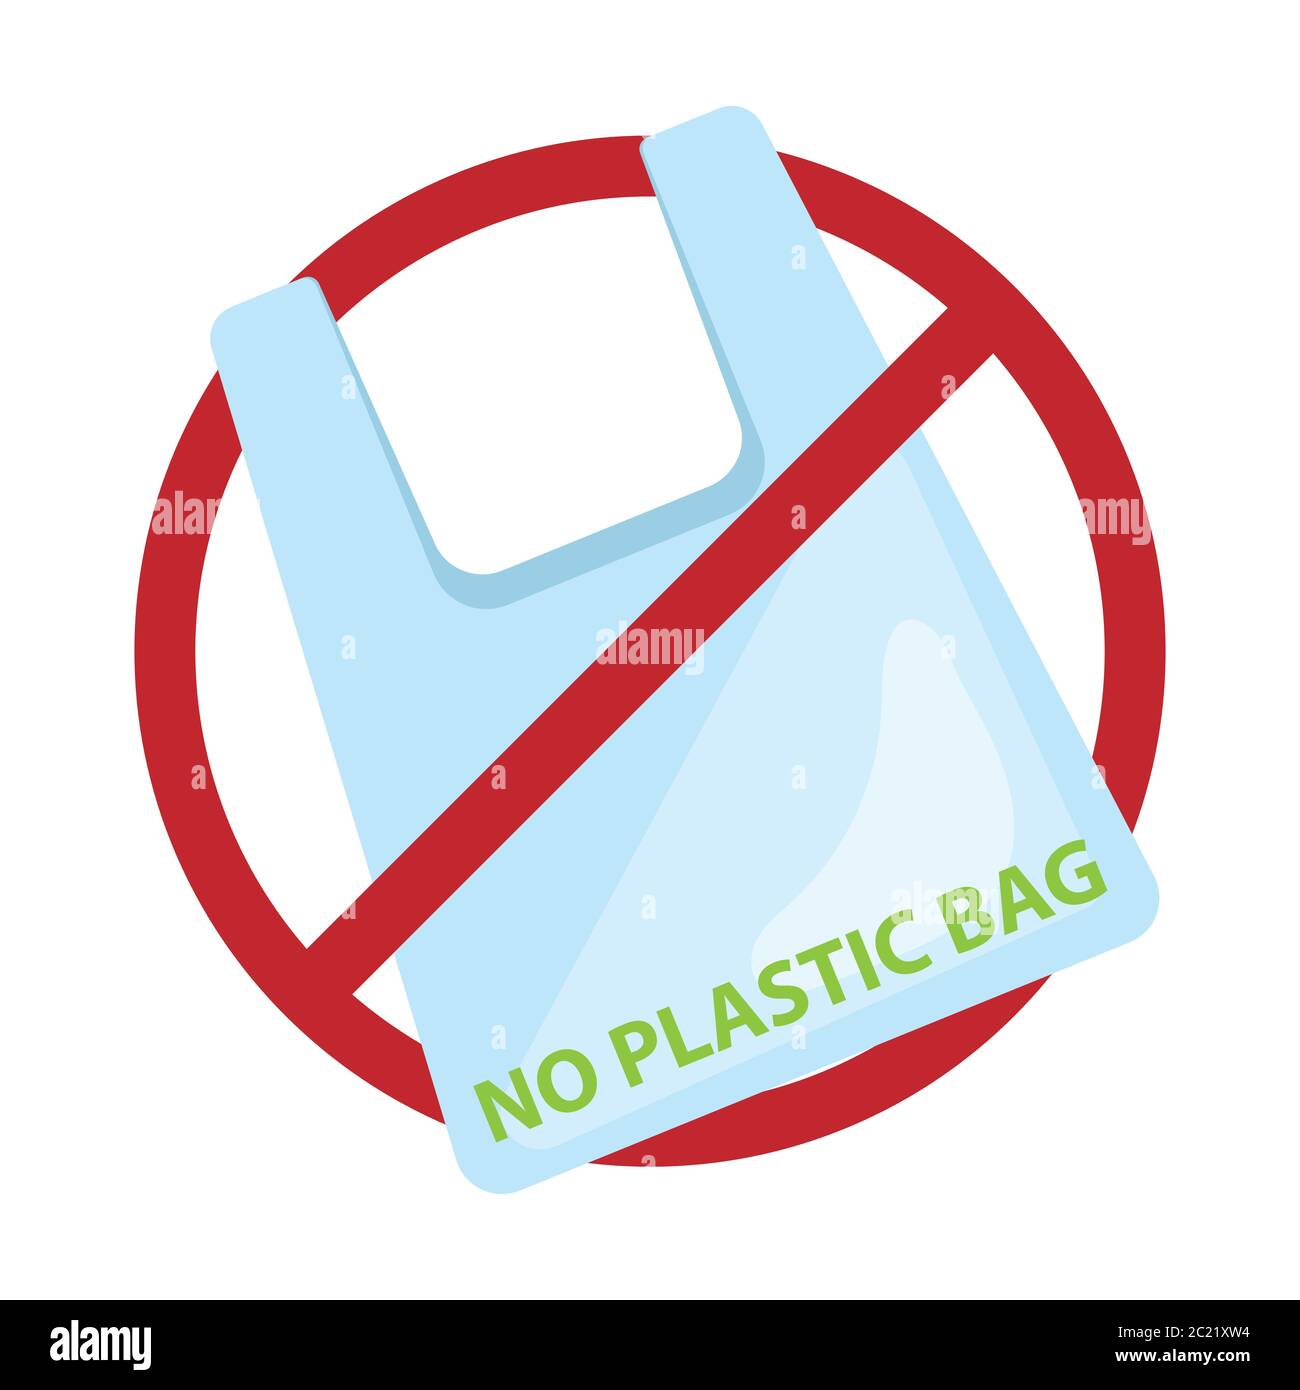 Kein Plastiktüten-Slogan, Vektorgrafik Stock-Vektorgrafik - Alamy